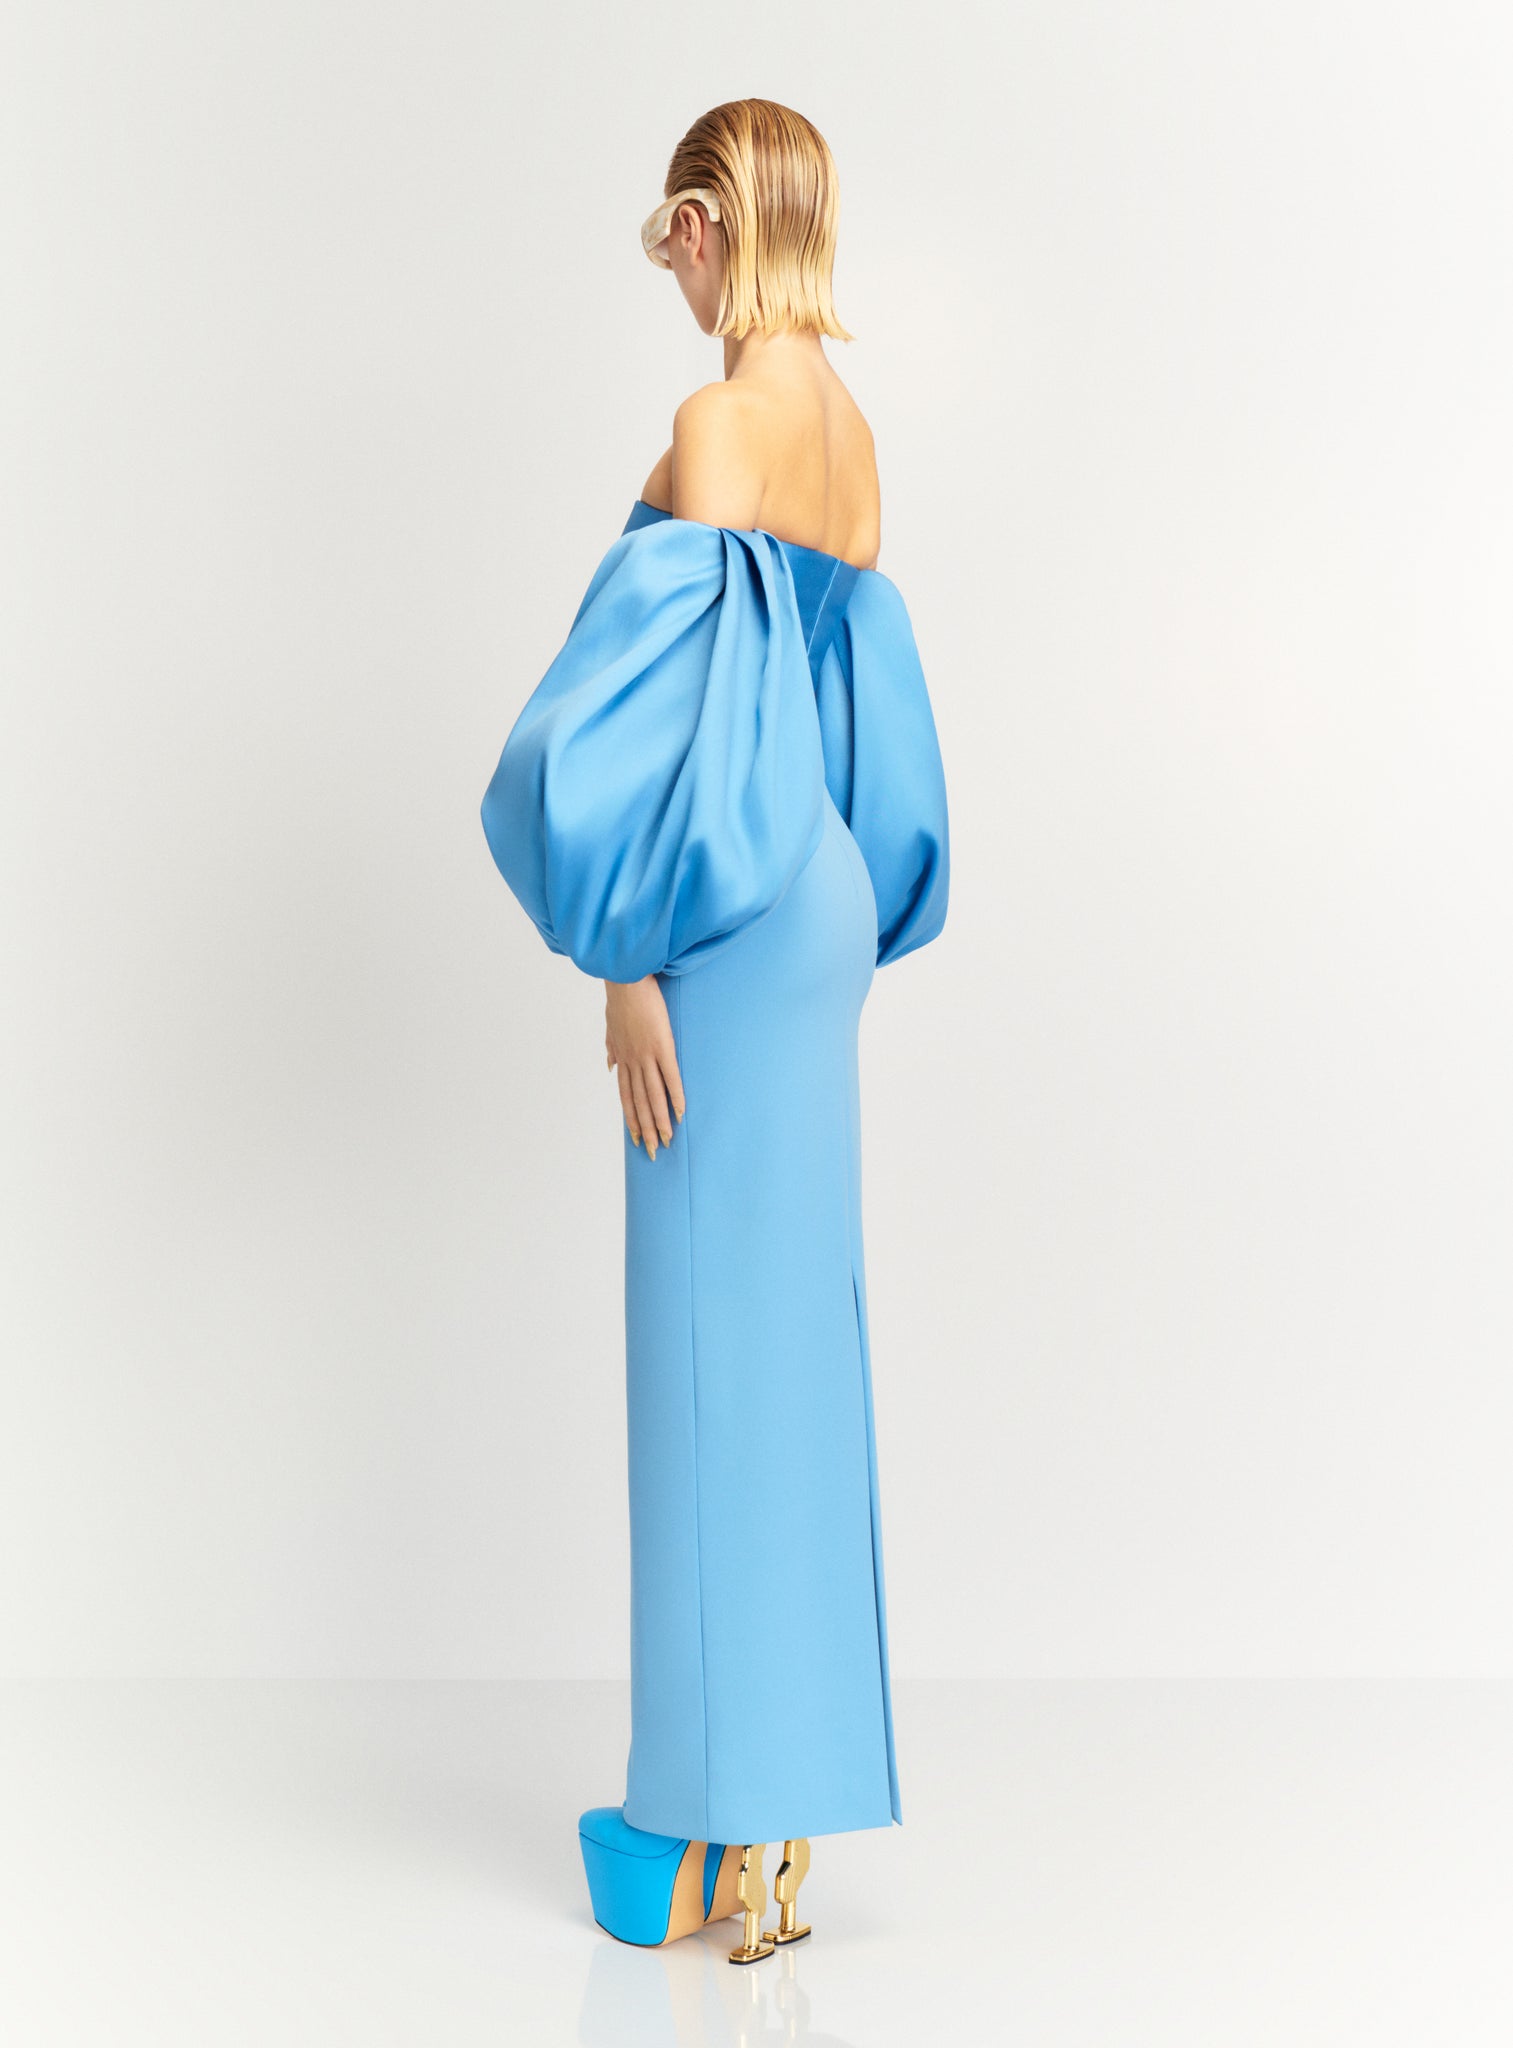 The Carmen Maxi Dress in Bluebell